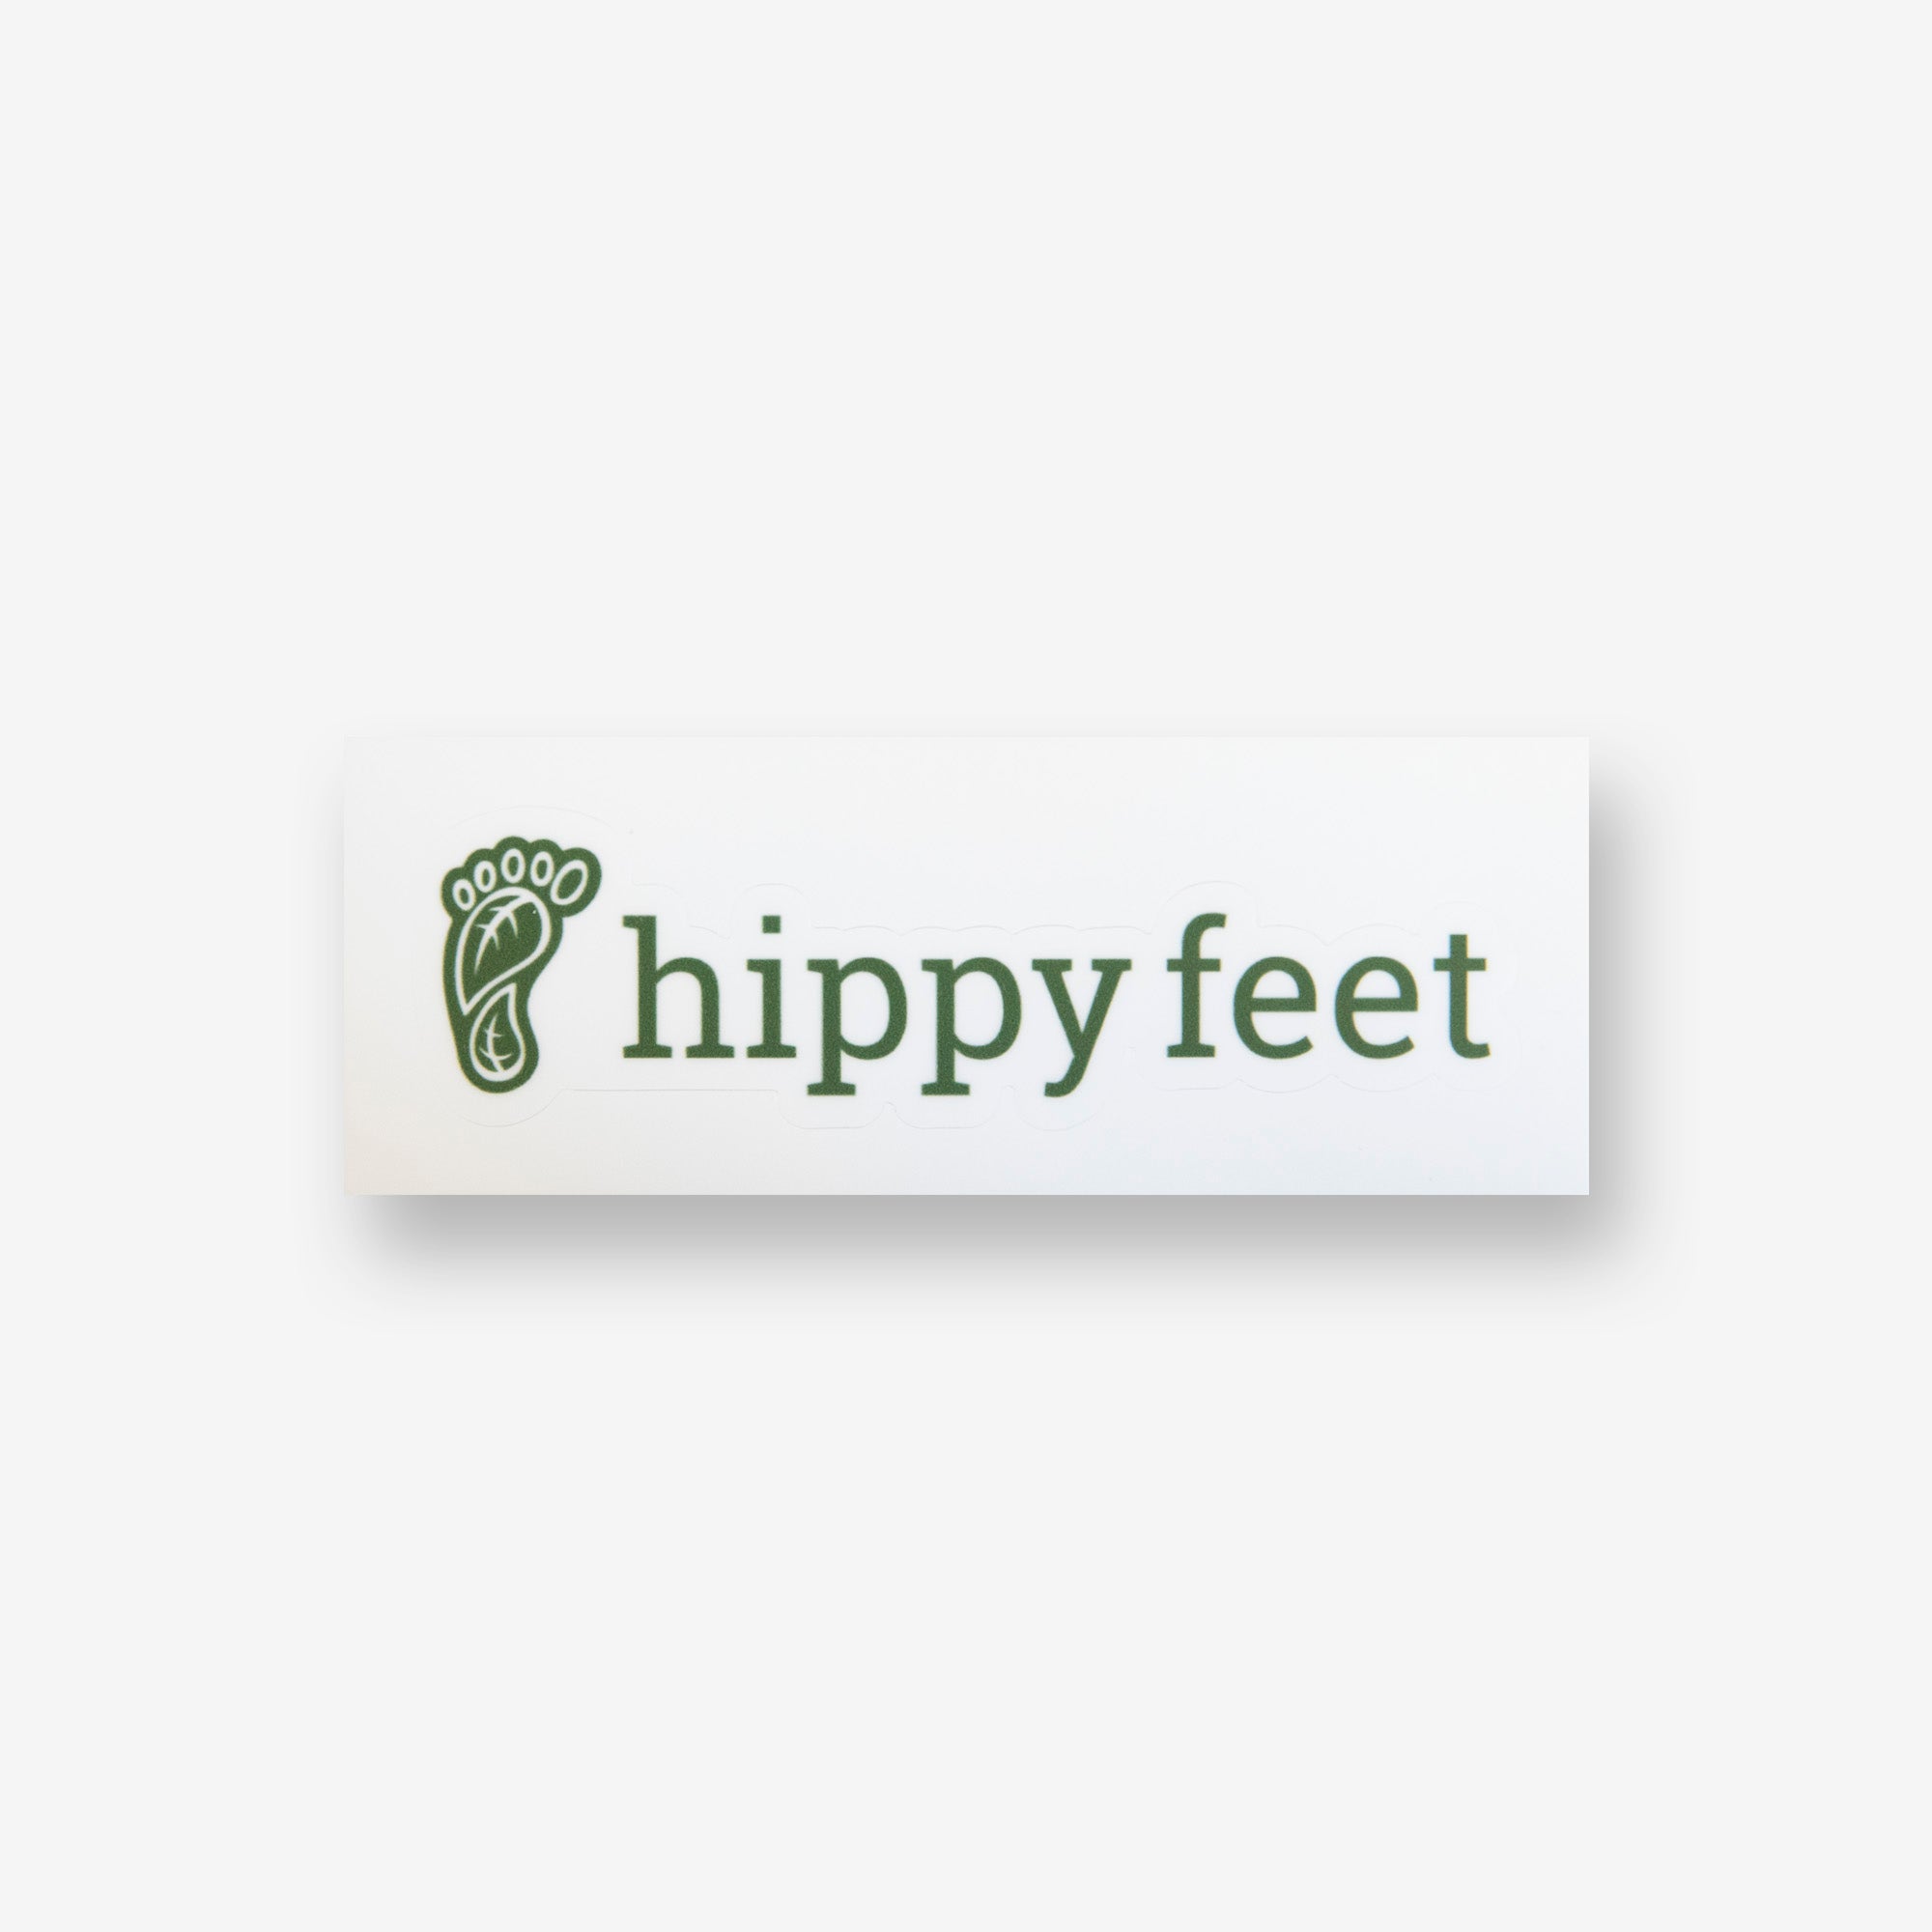 Hippy Feet logo sticker